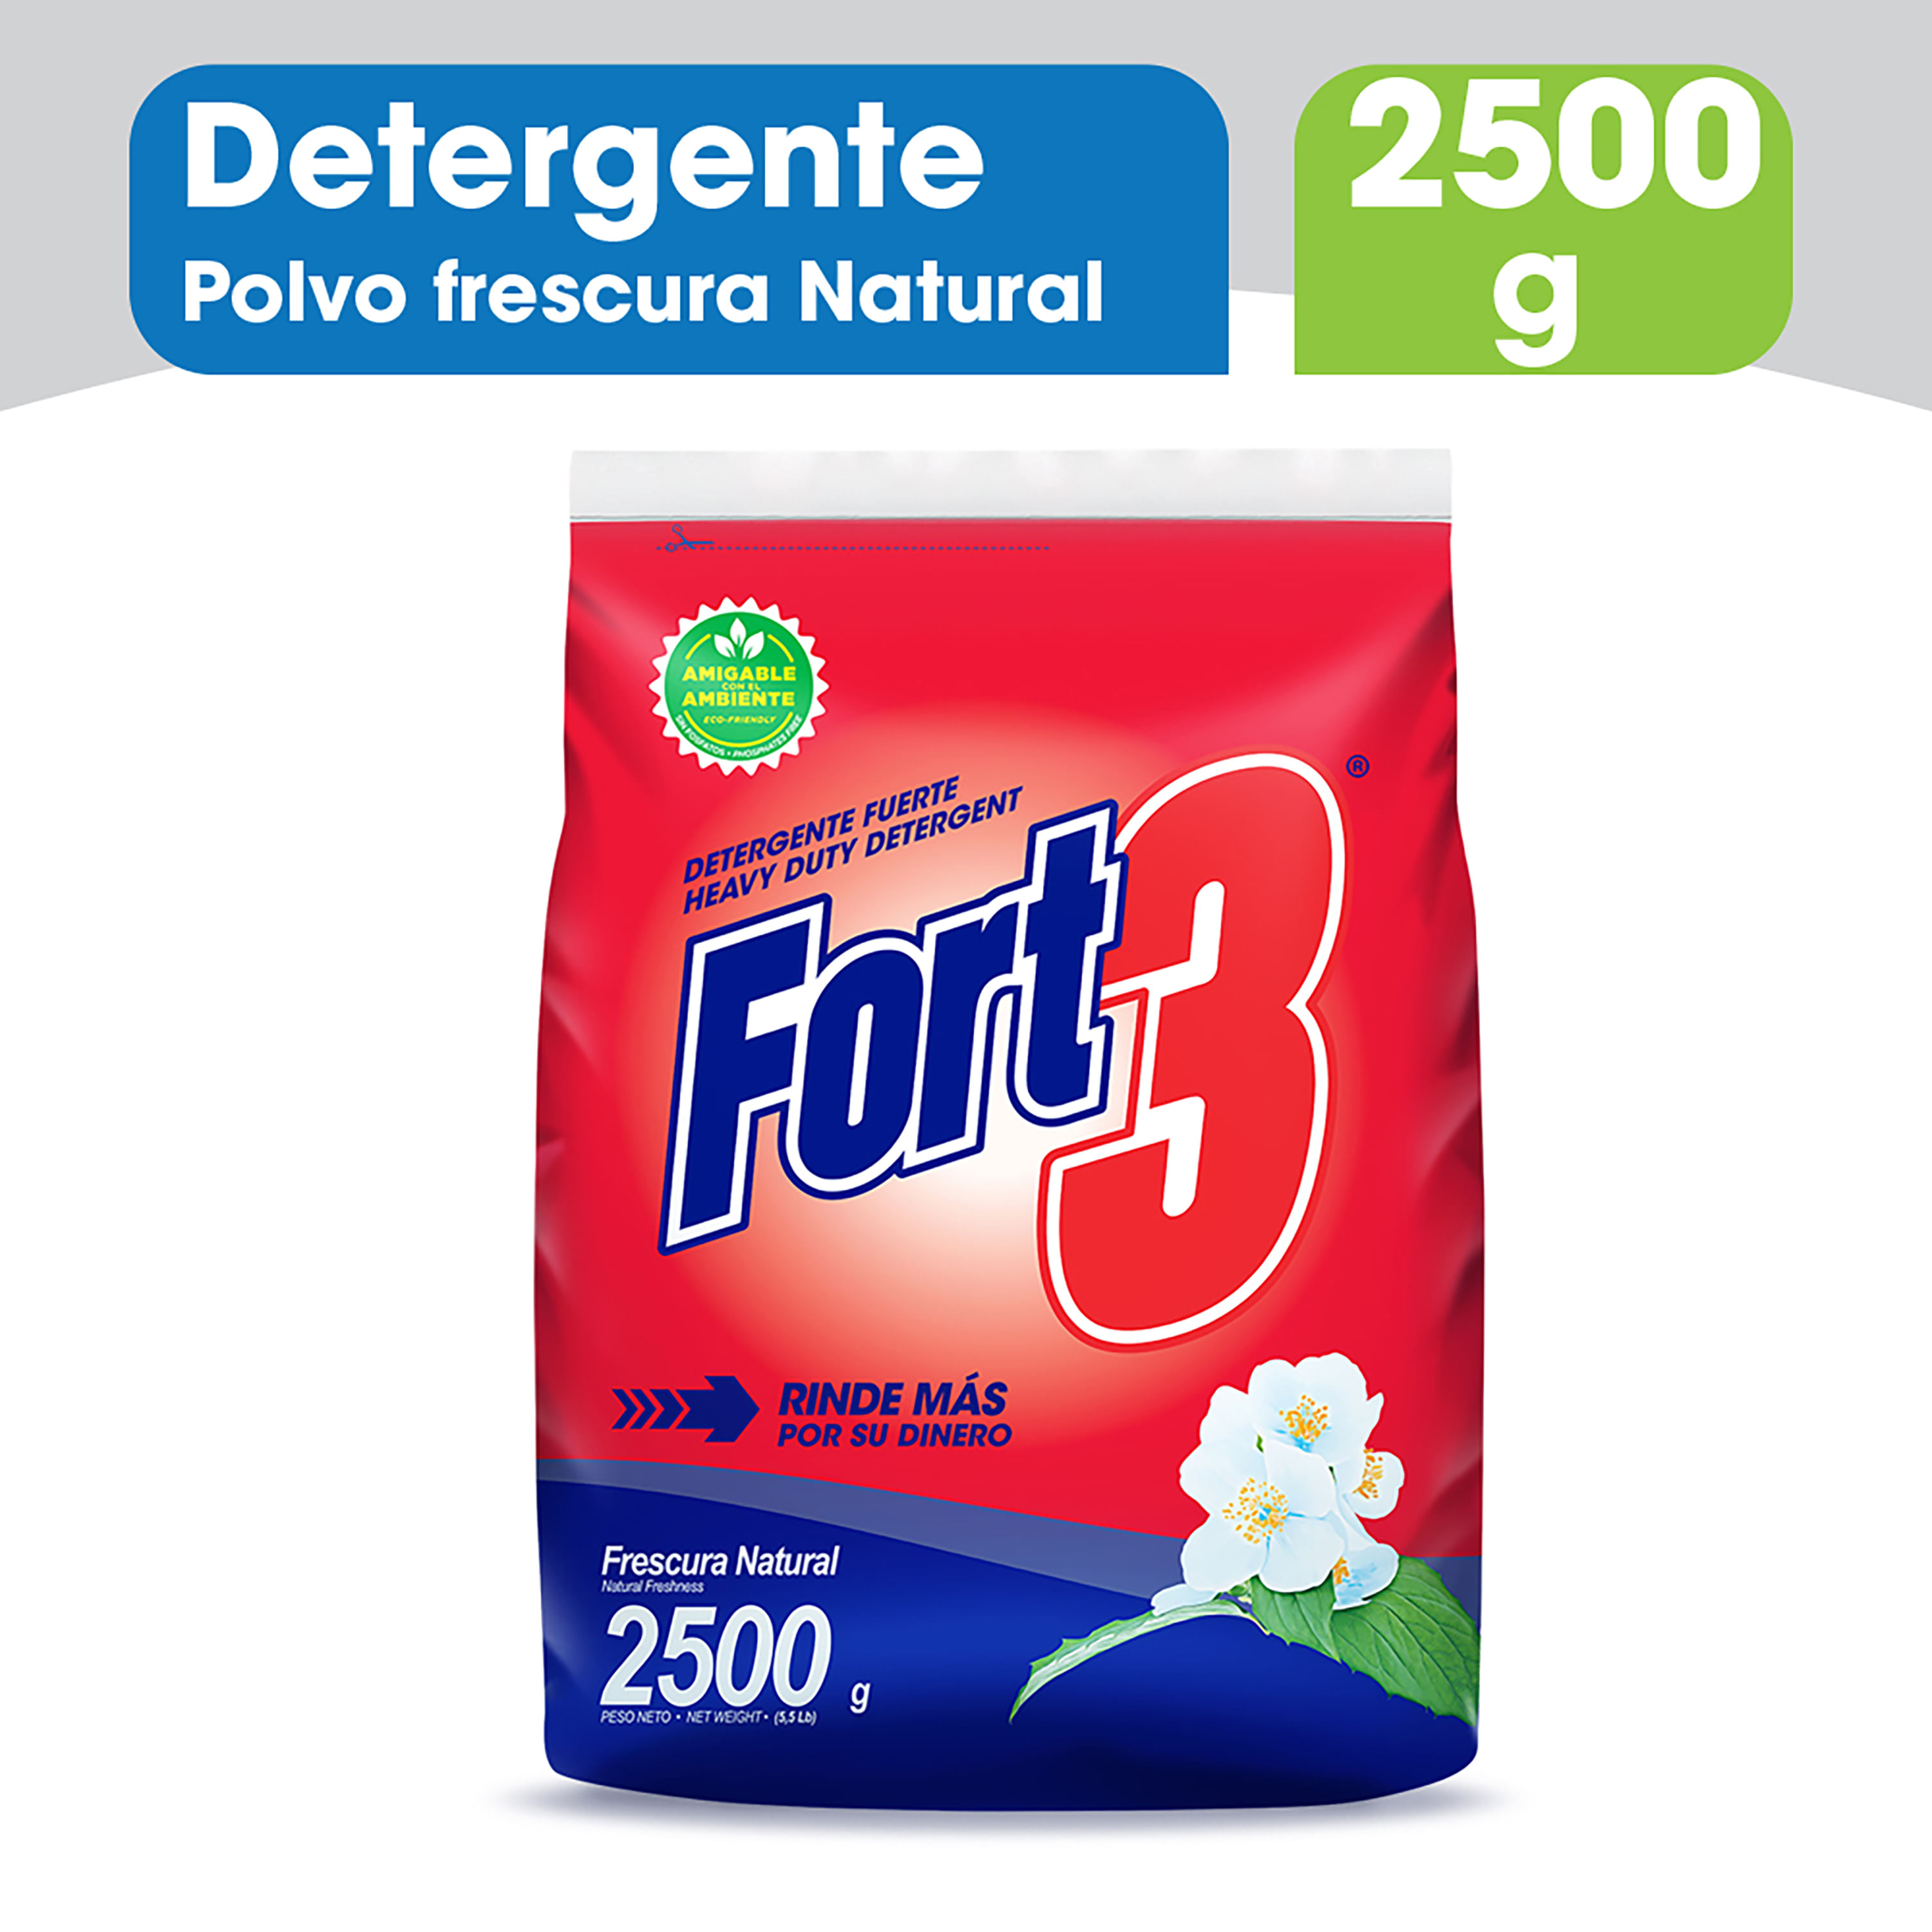 Detergente-En-Polvo-Marca-Fort3-Frescura-Natural-2500g-1-33106